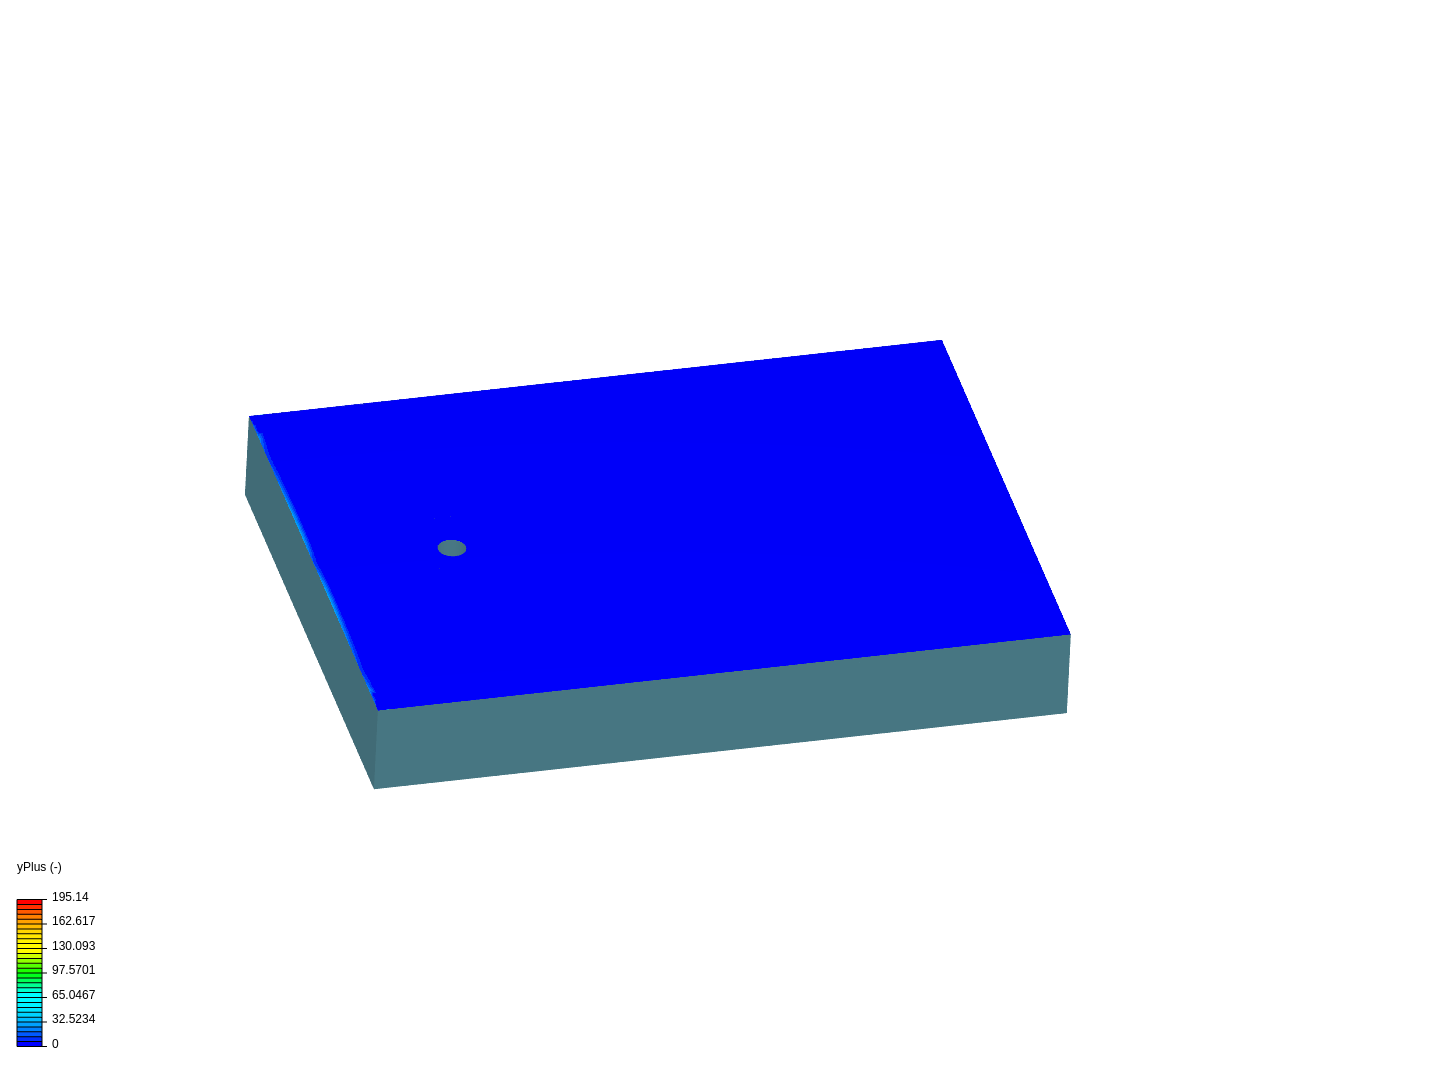 CFD flow over risers (cylinder) with strakes using k-omega SST model image